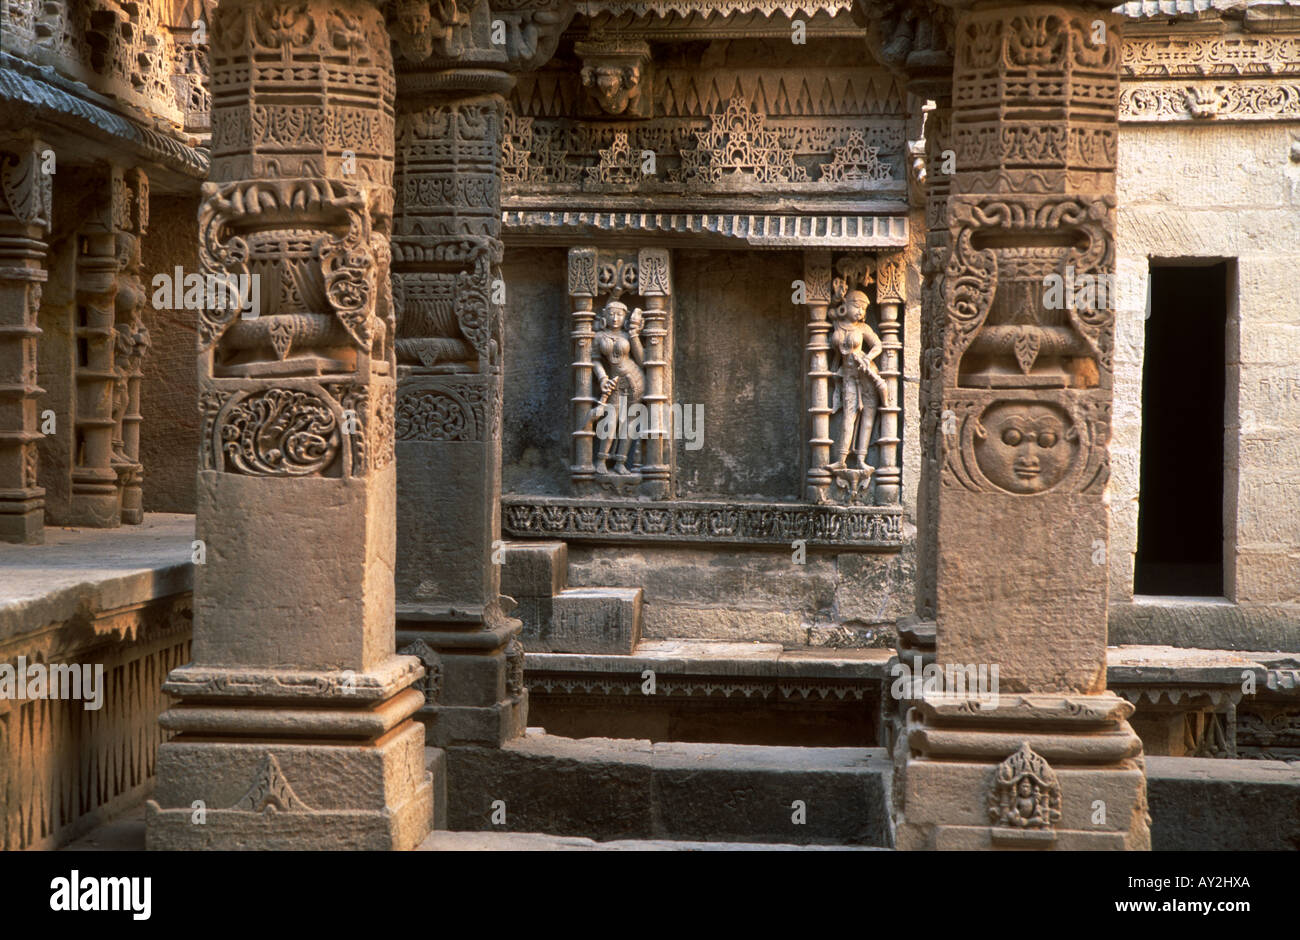 Patan step well called the Rani ki vav, Gujarat, India. Built about 1050 A.D. Stock Photo